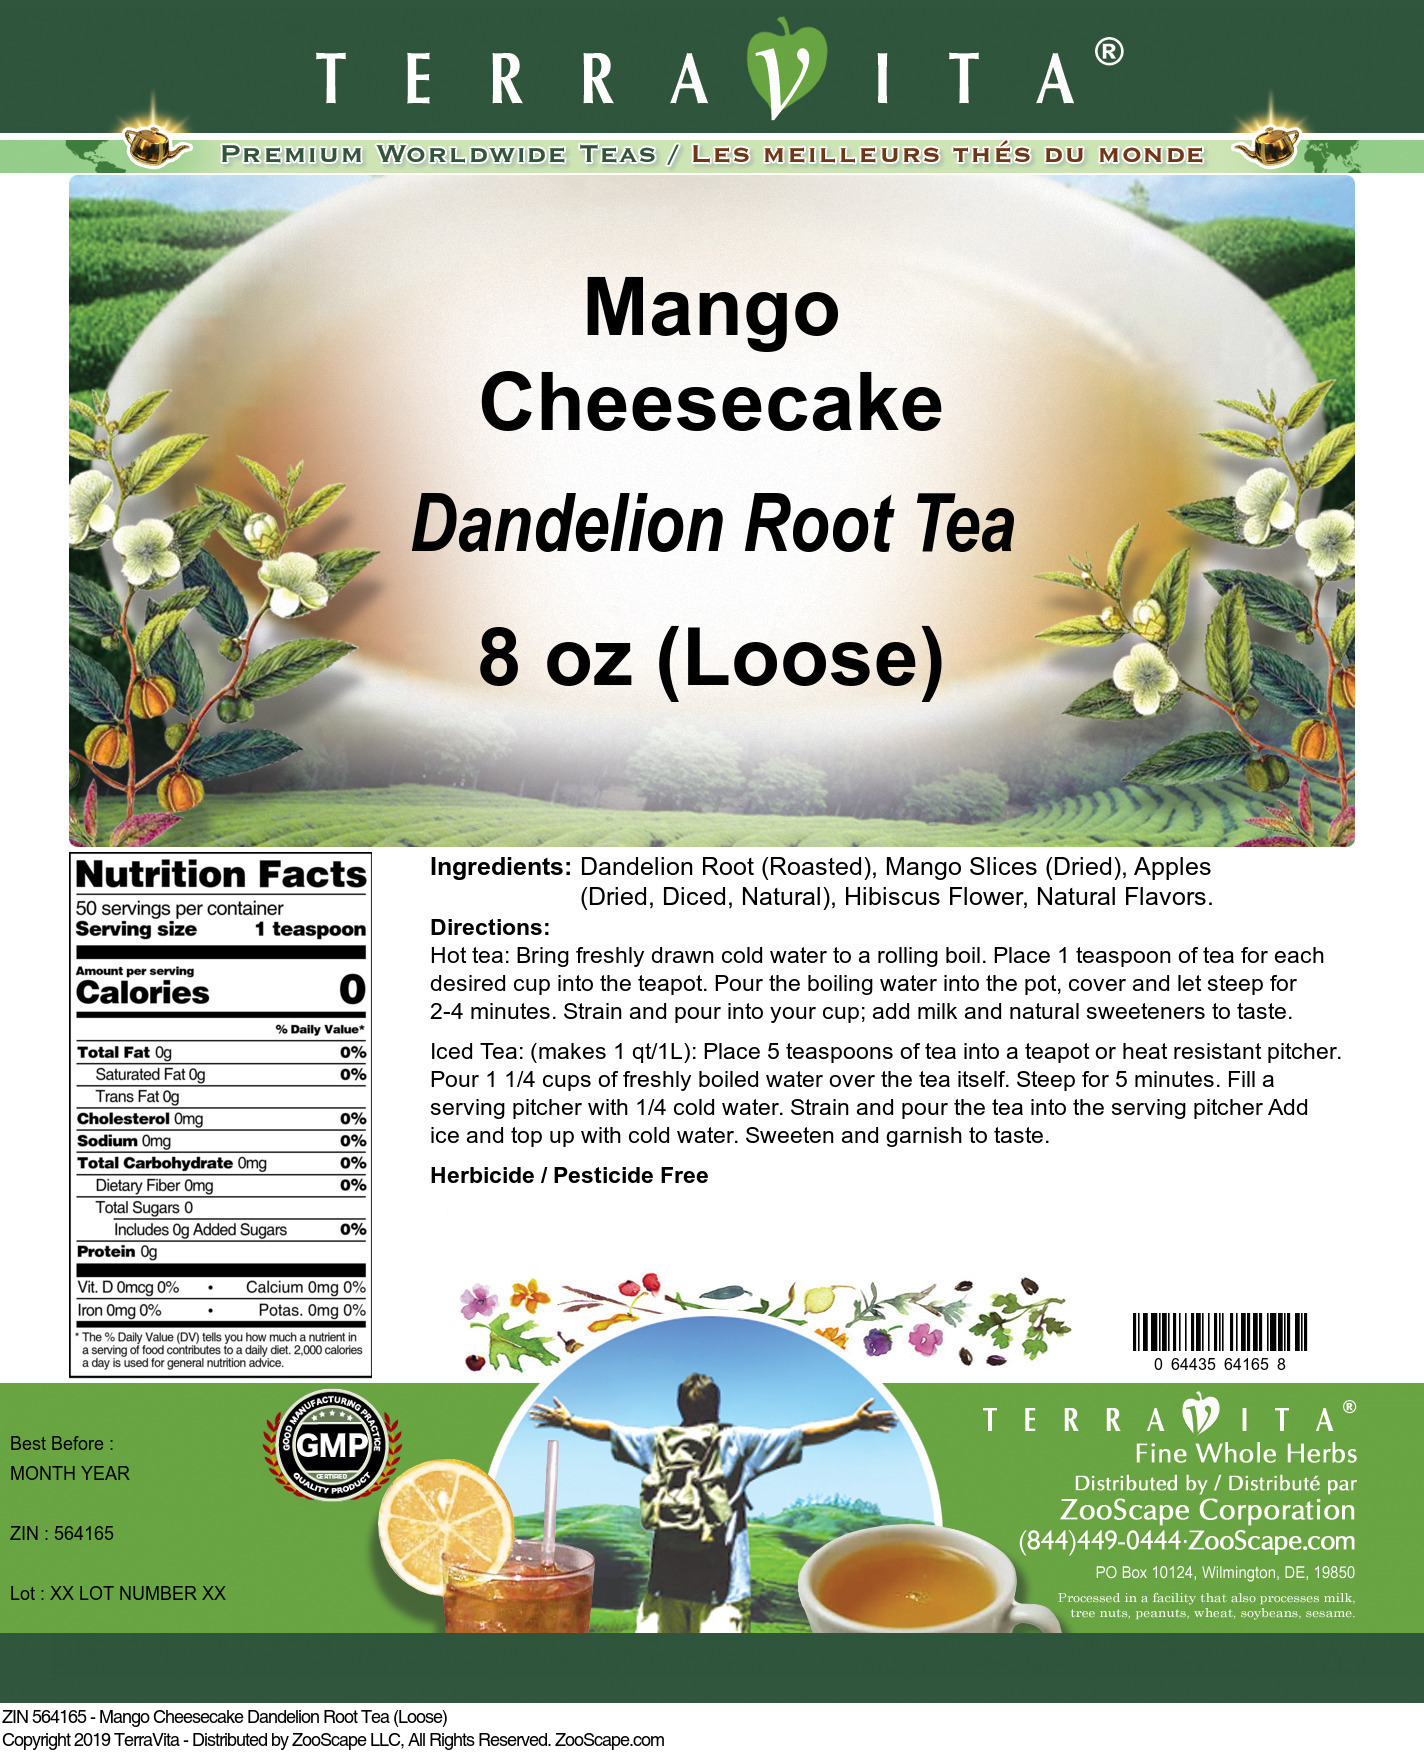 Mango Cheesecake Dandelion Root Tea (Loose) - Label